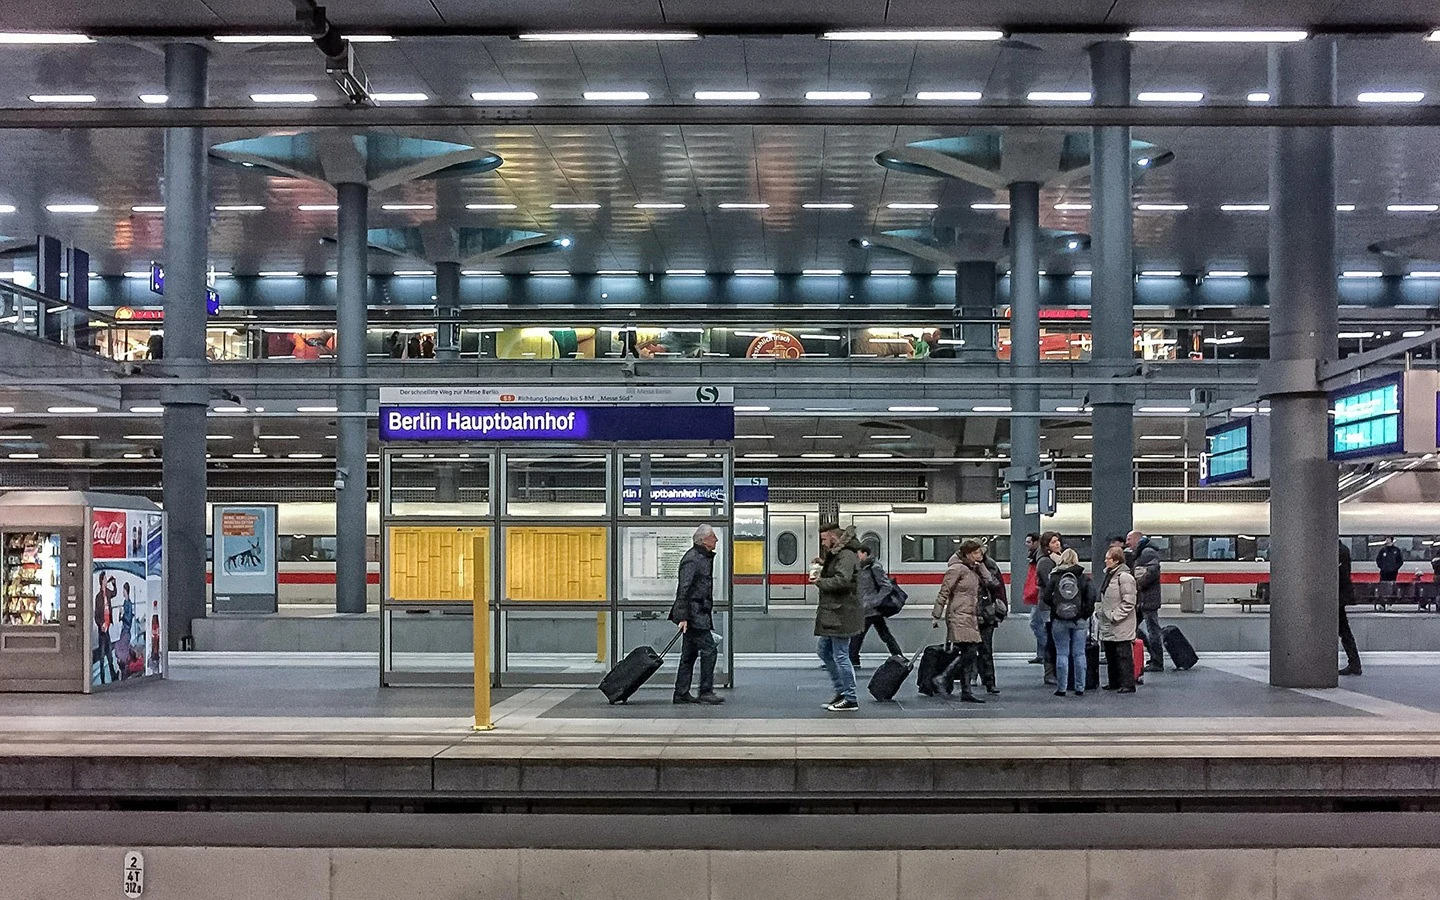 Berlin Hauptbahnhof main train station